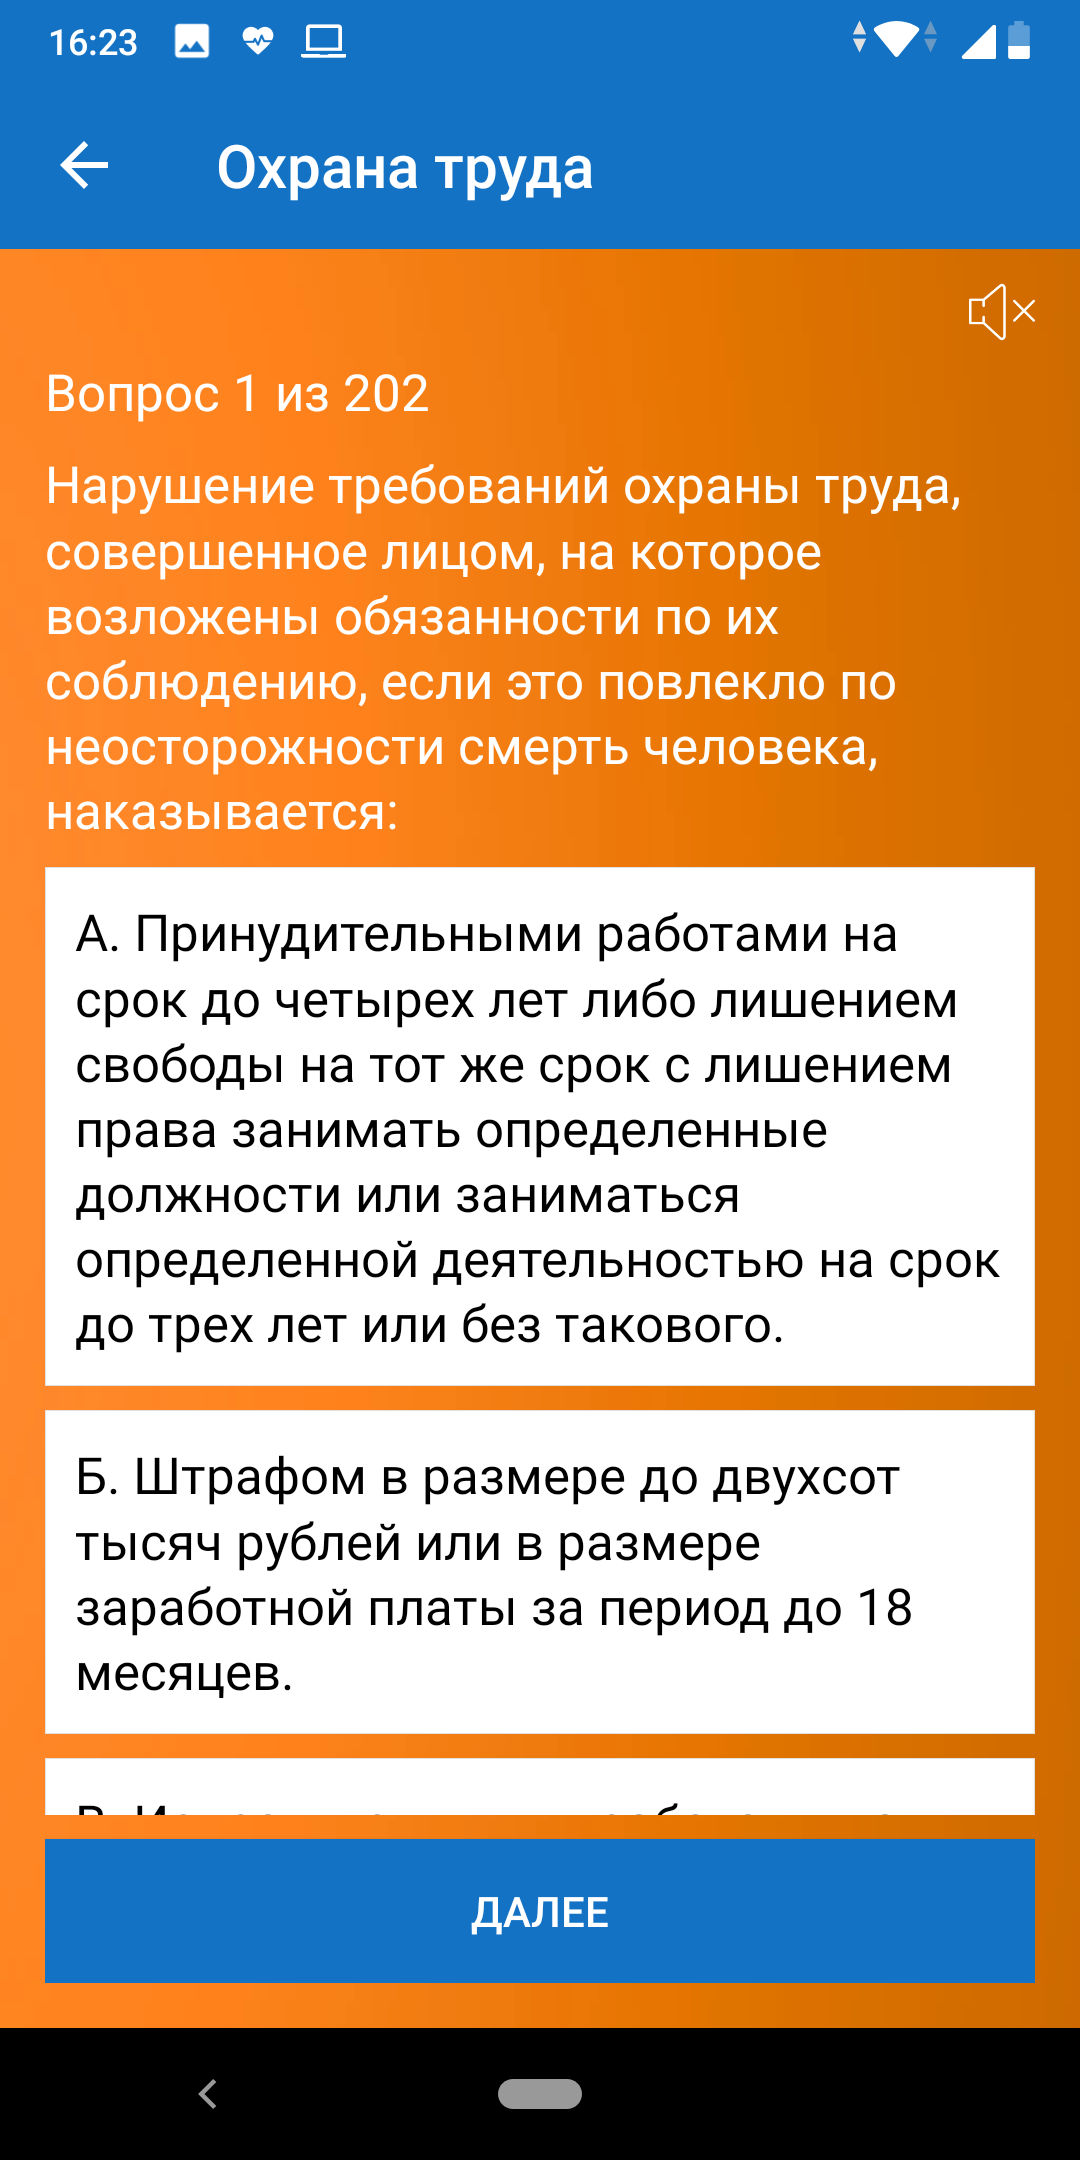 Android application Справочник охранника screenshort